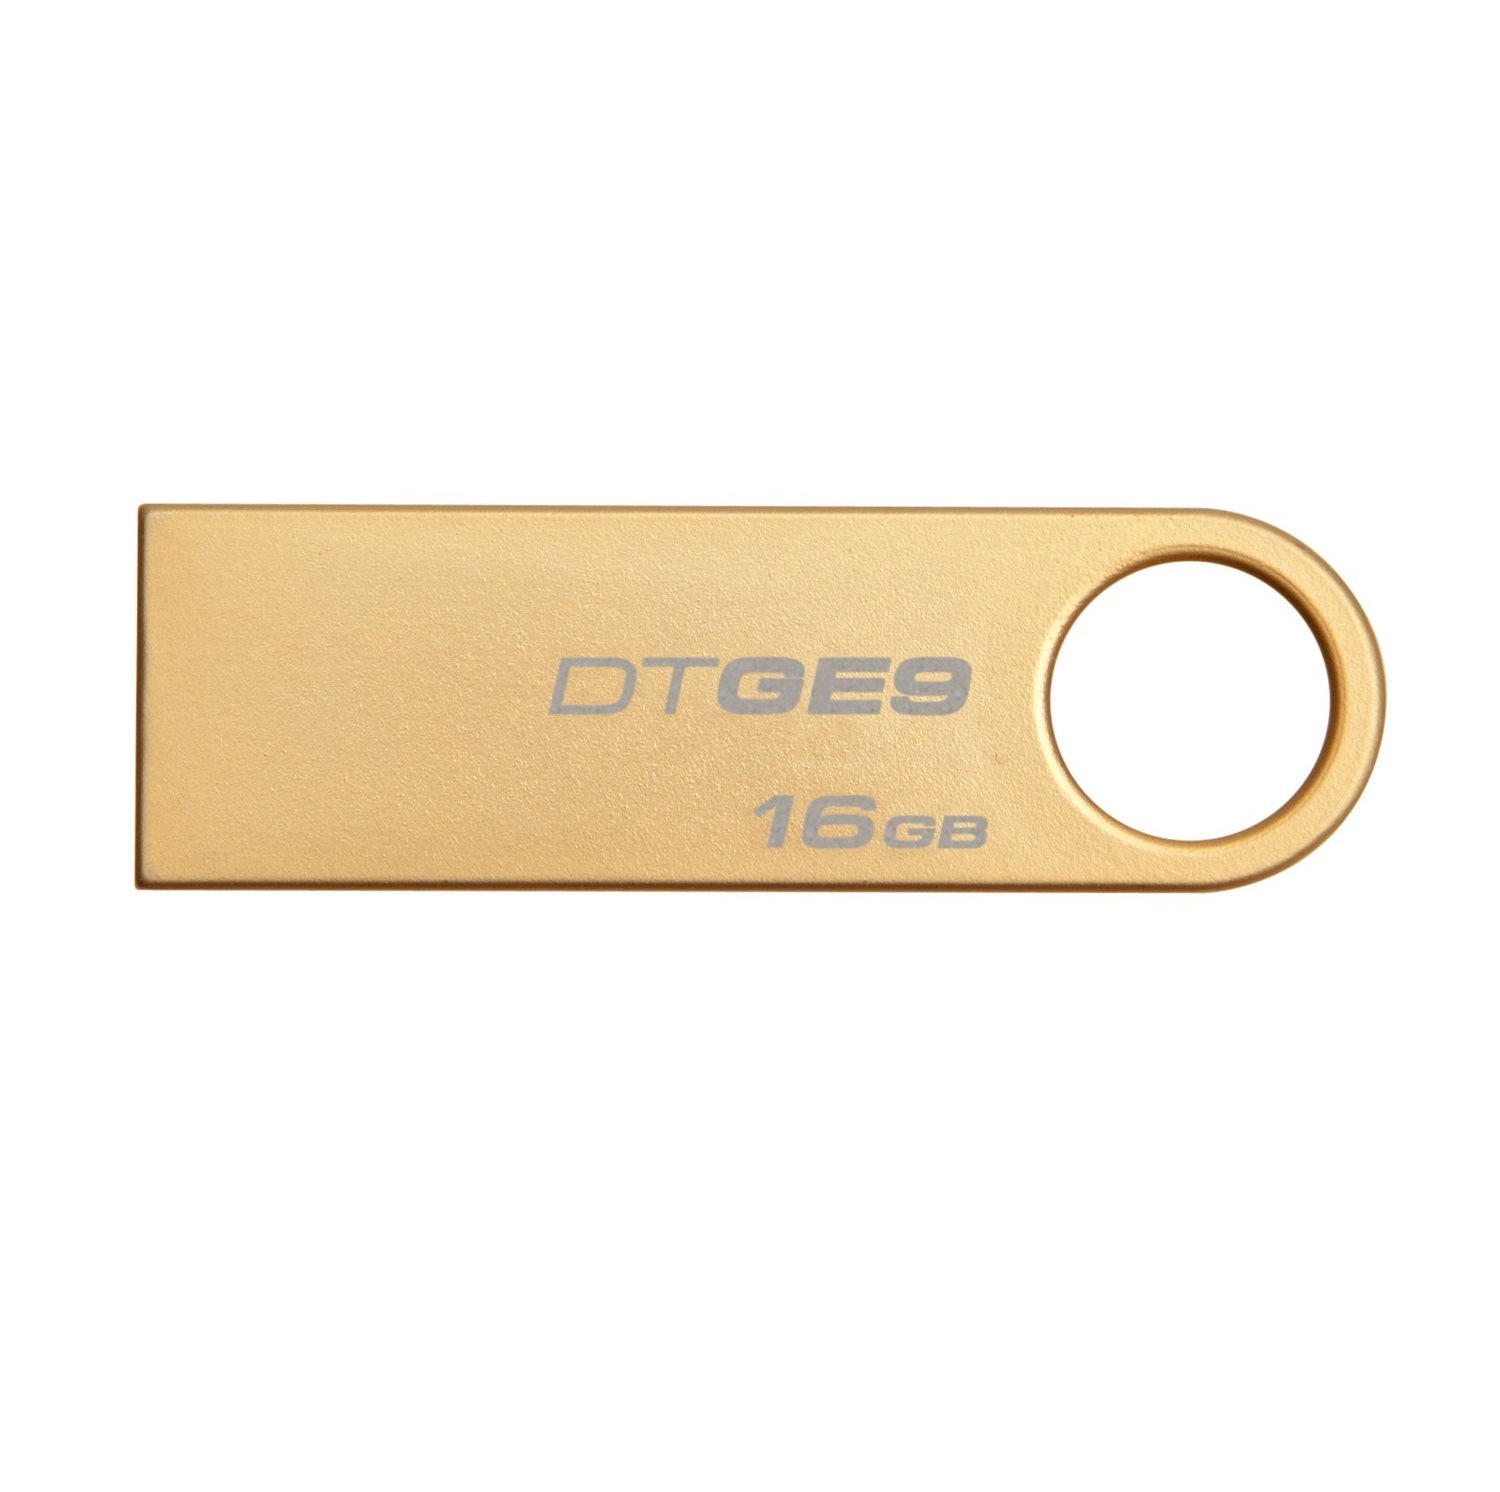 USB Kingston DTGE9 16Gb